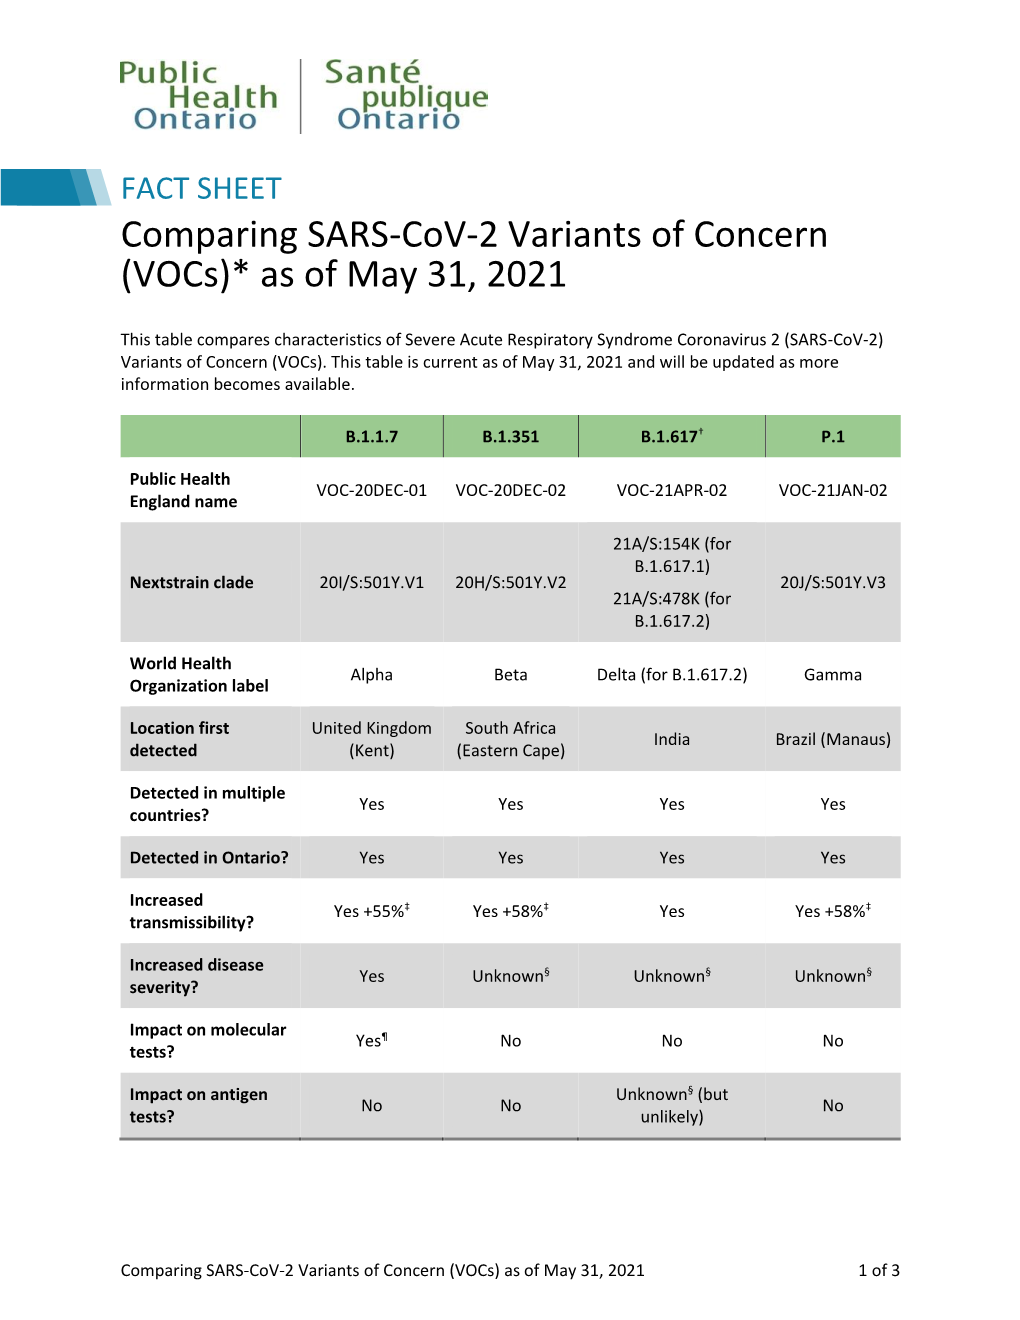 Comparing SARS-Cov-2 Variants of Concern (Vocs)* As of May 31, 2021